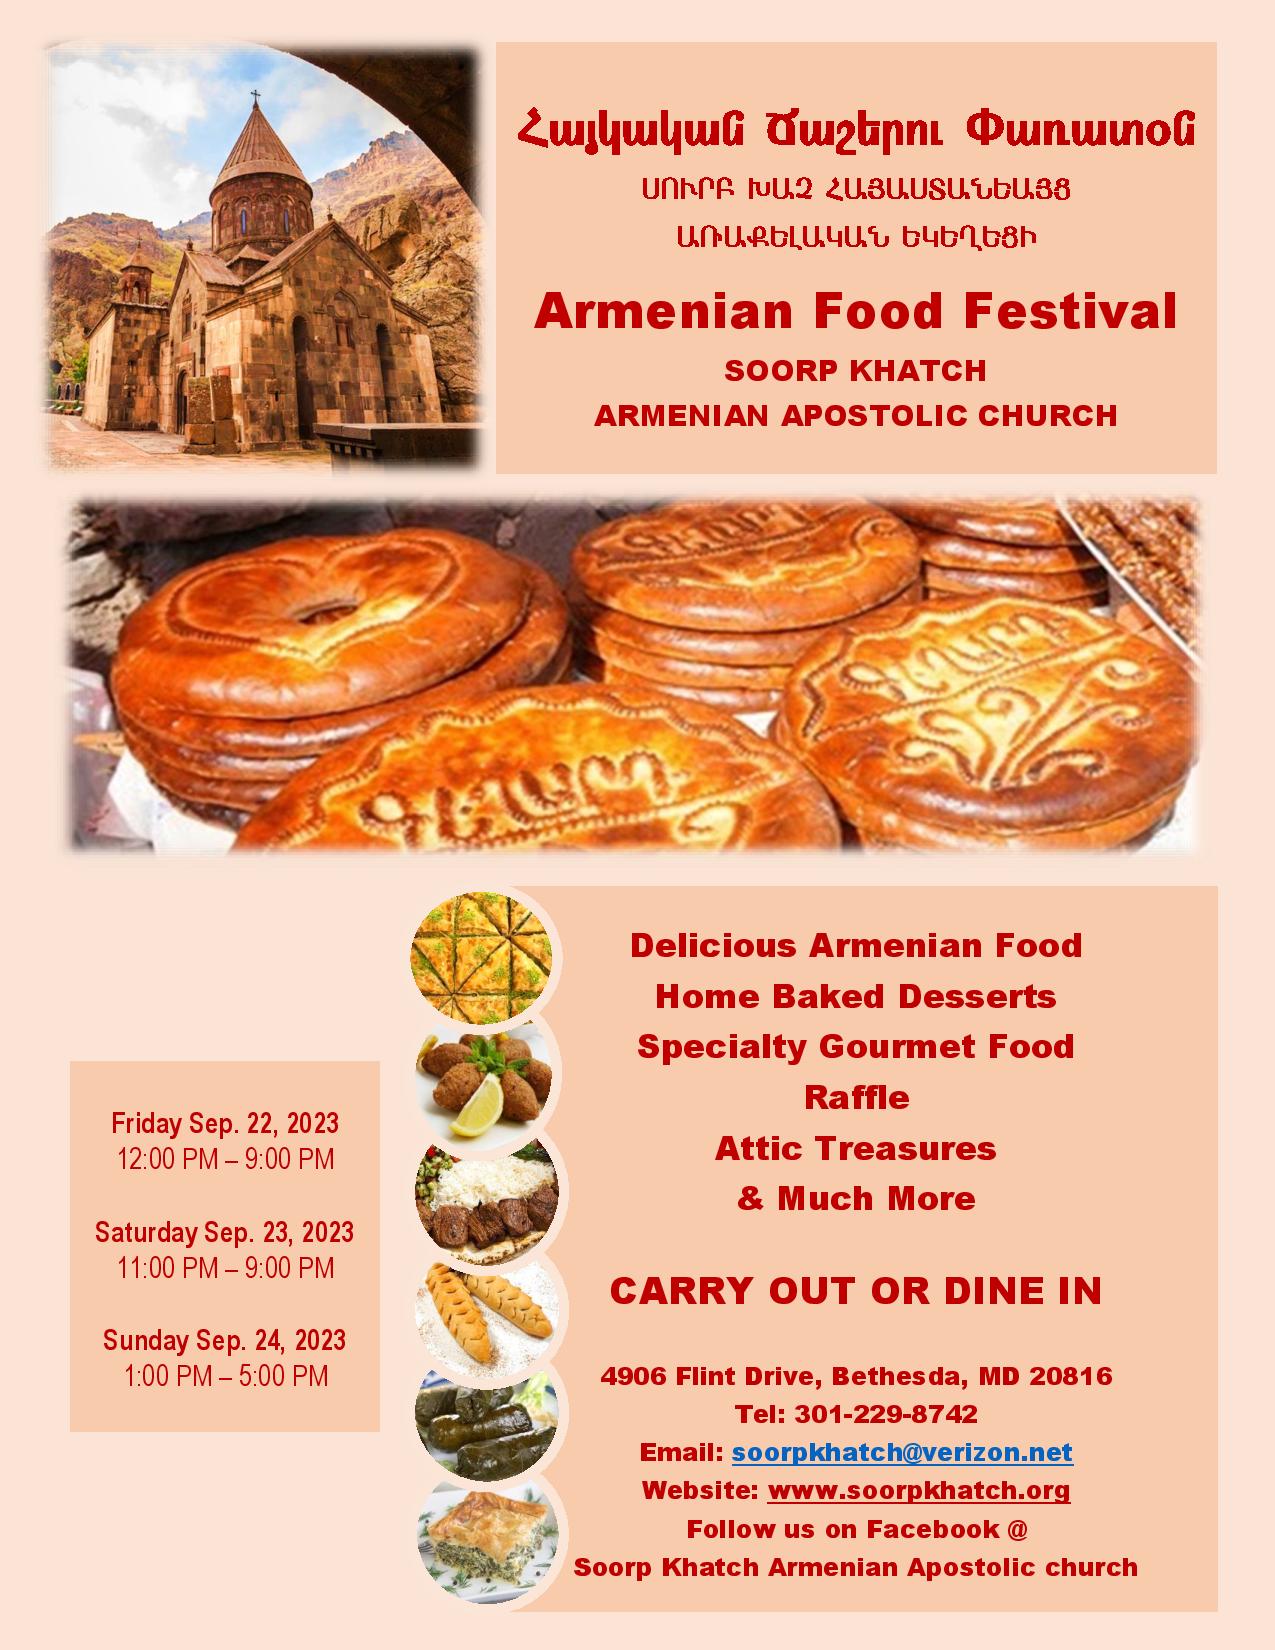 2023 Armenian Food Festival Soorp Khatch